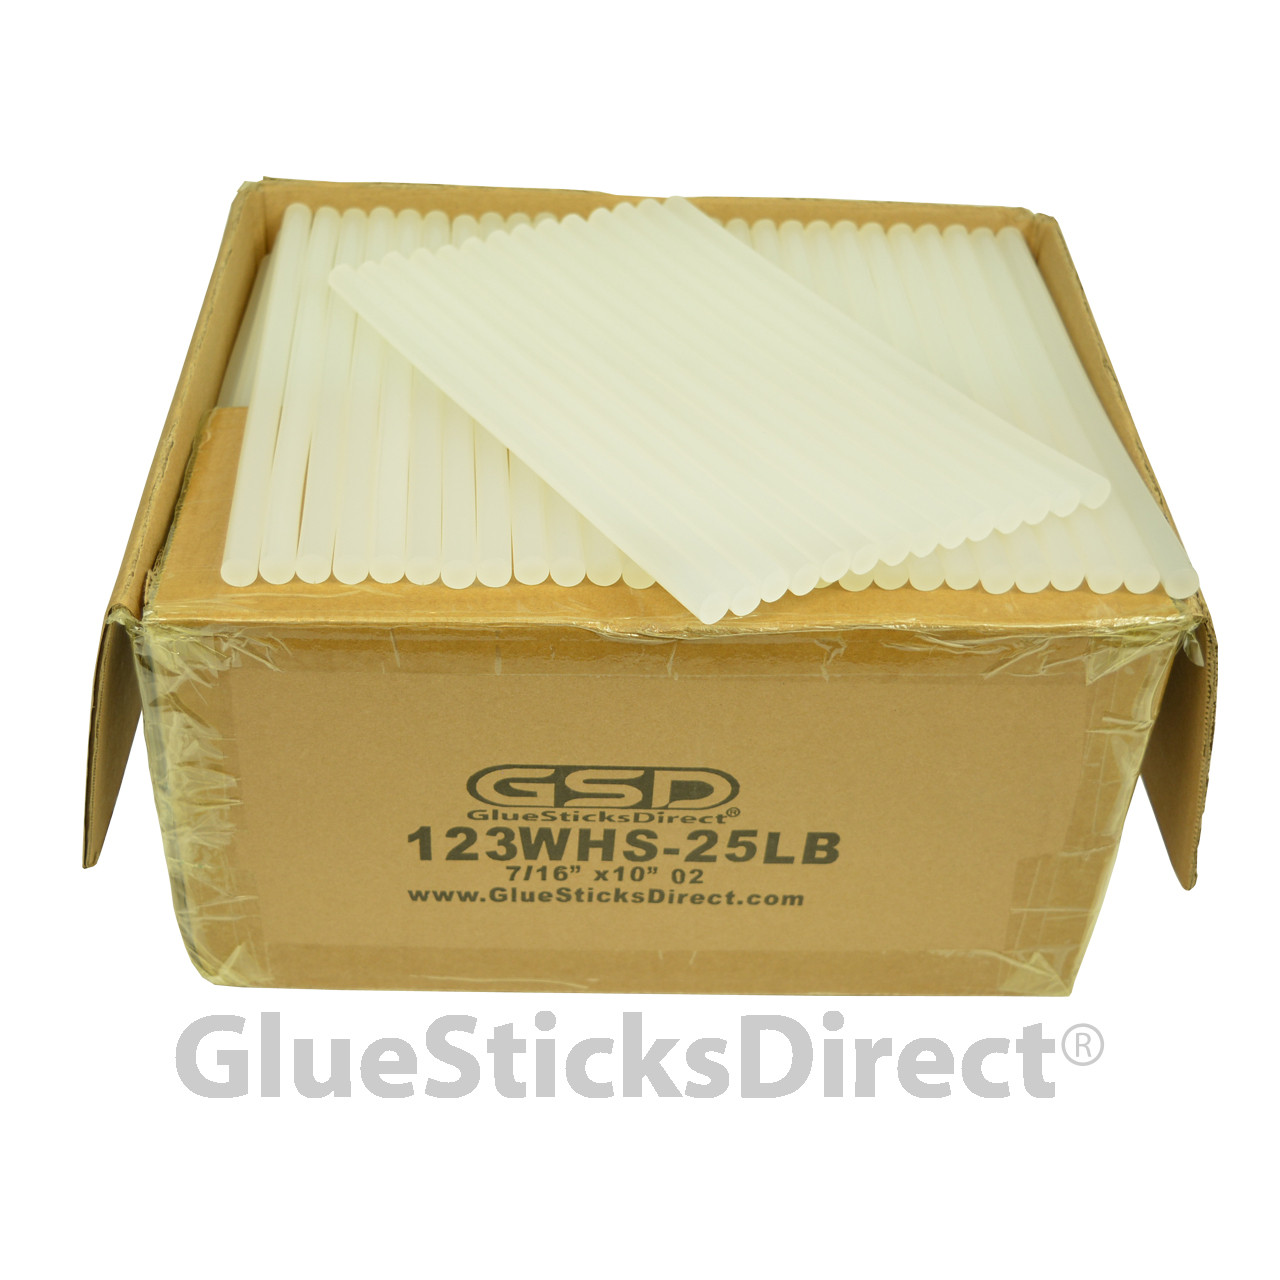 Hot Melt 5lb Premium 7/16" x 10" glue sticks Priority 1 to 3 days free shipping 